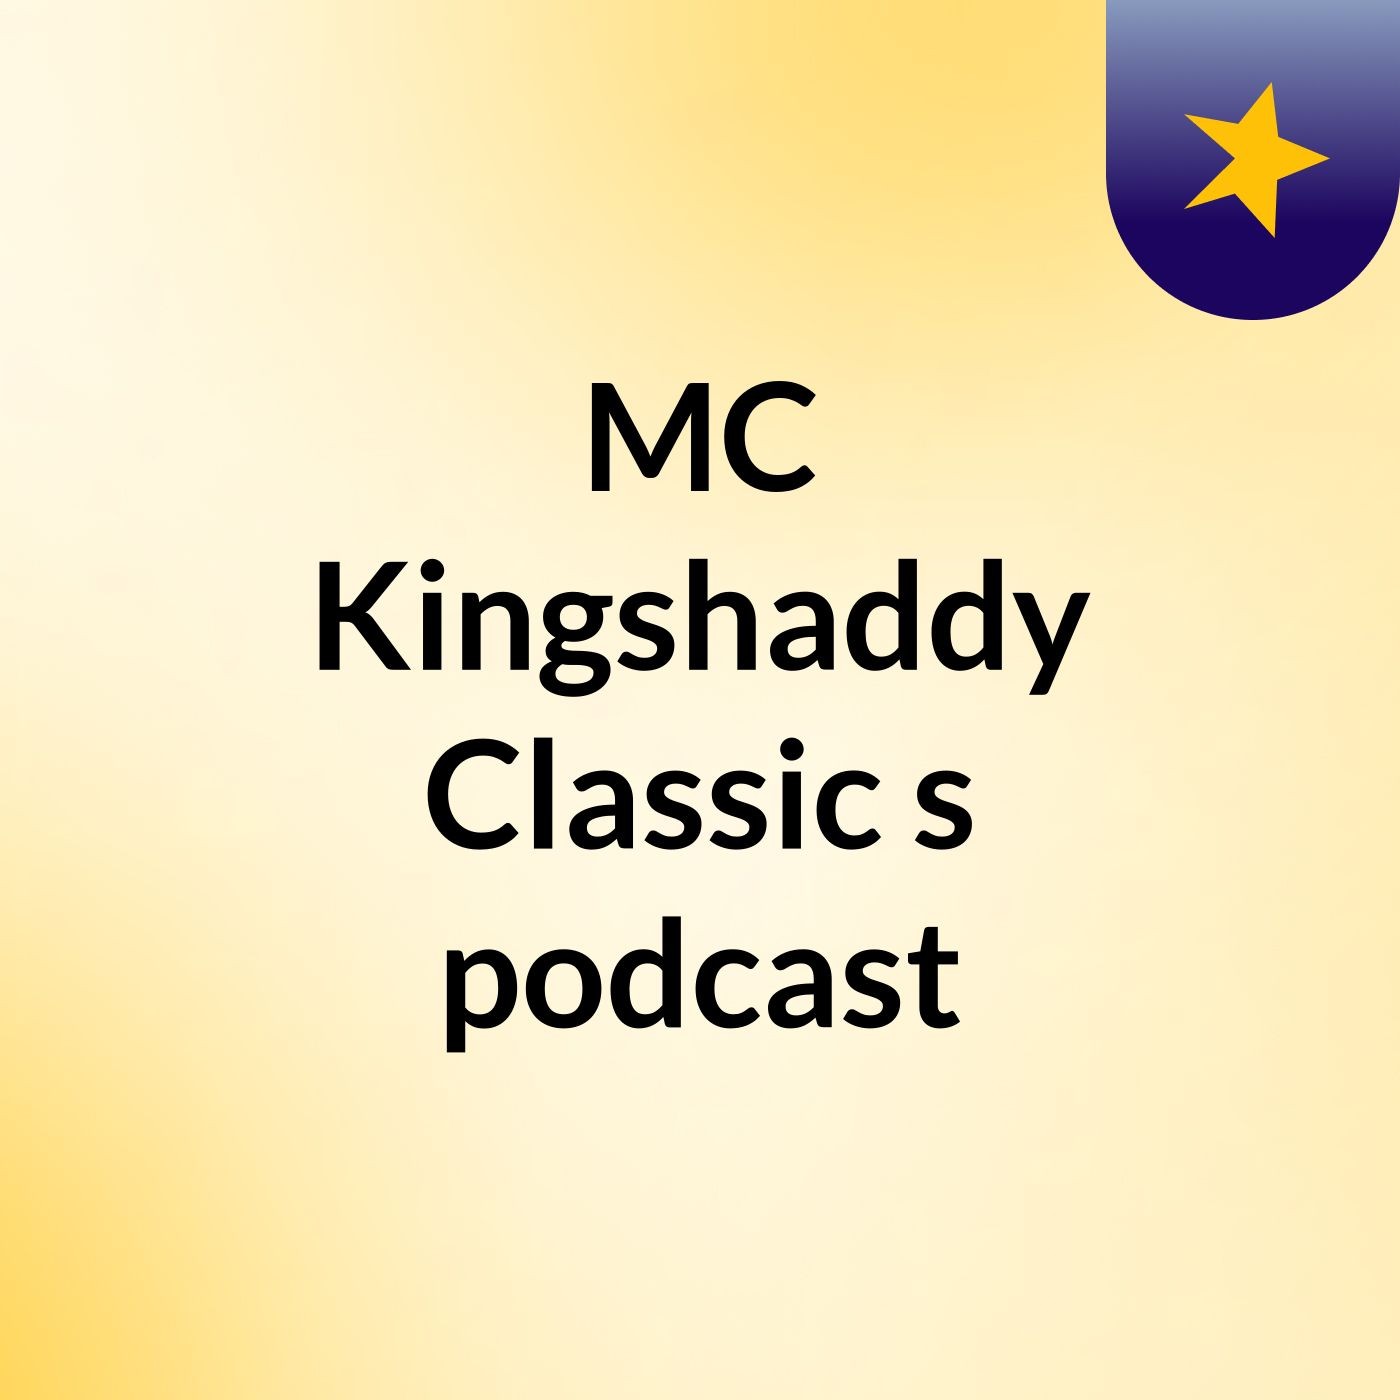 MC Kingshaddy Classic's podcast